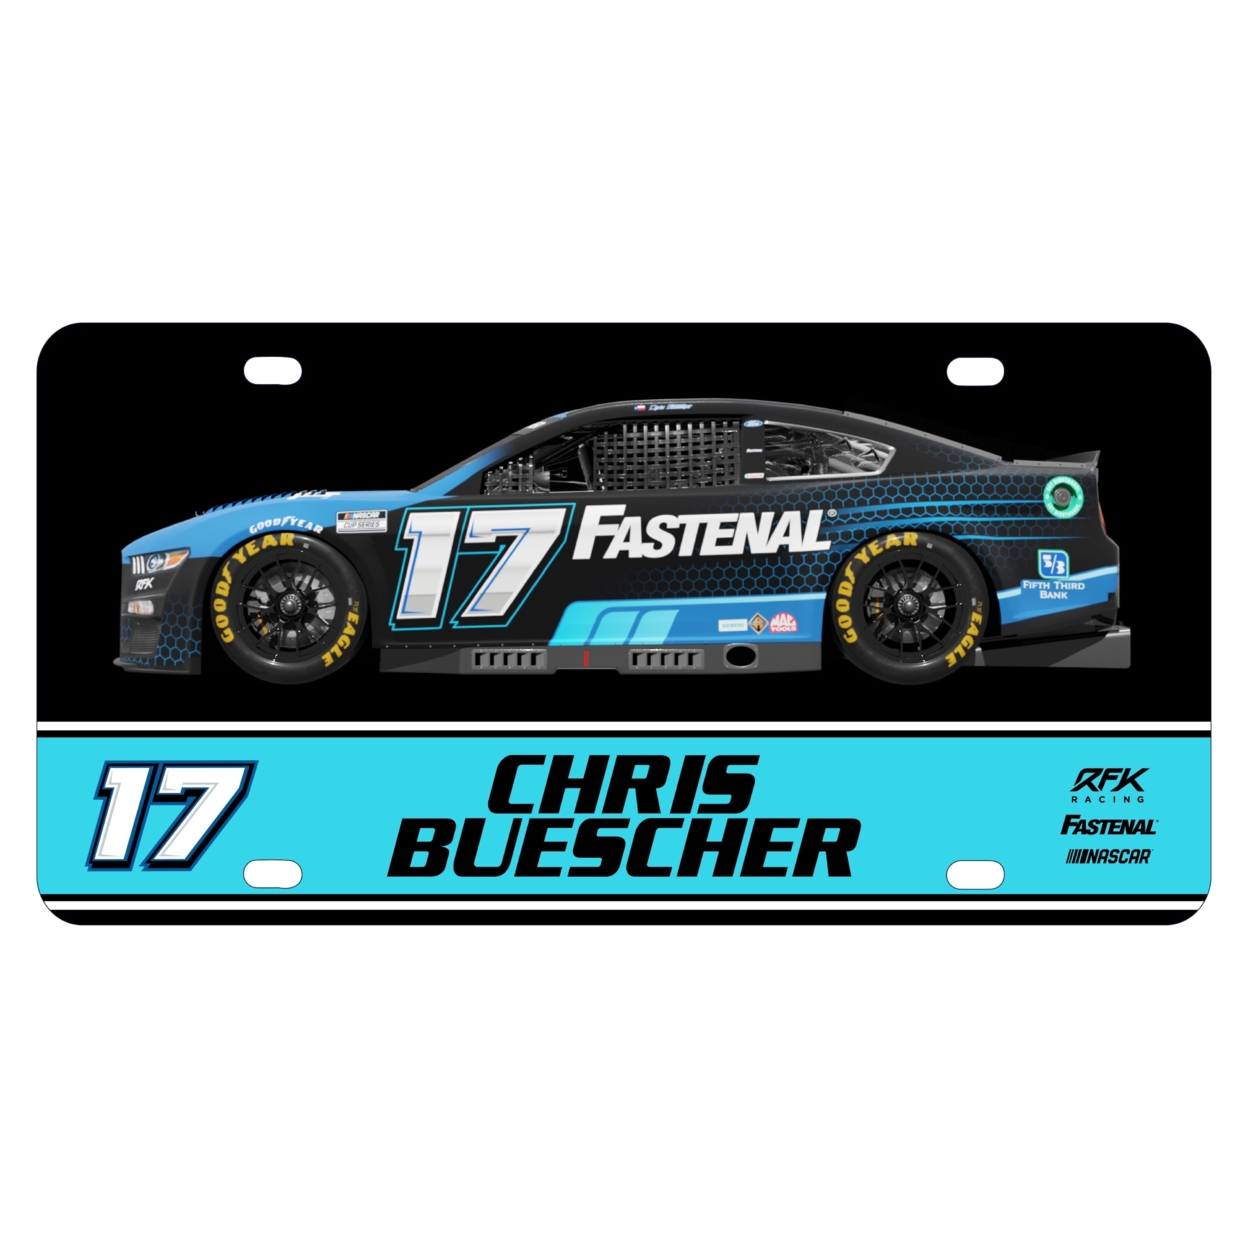 #17 Chris Buescher Officially Licensed NASCAR License Plate